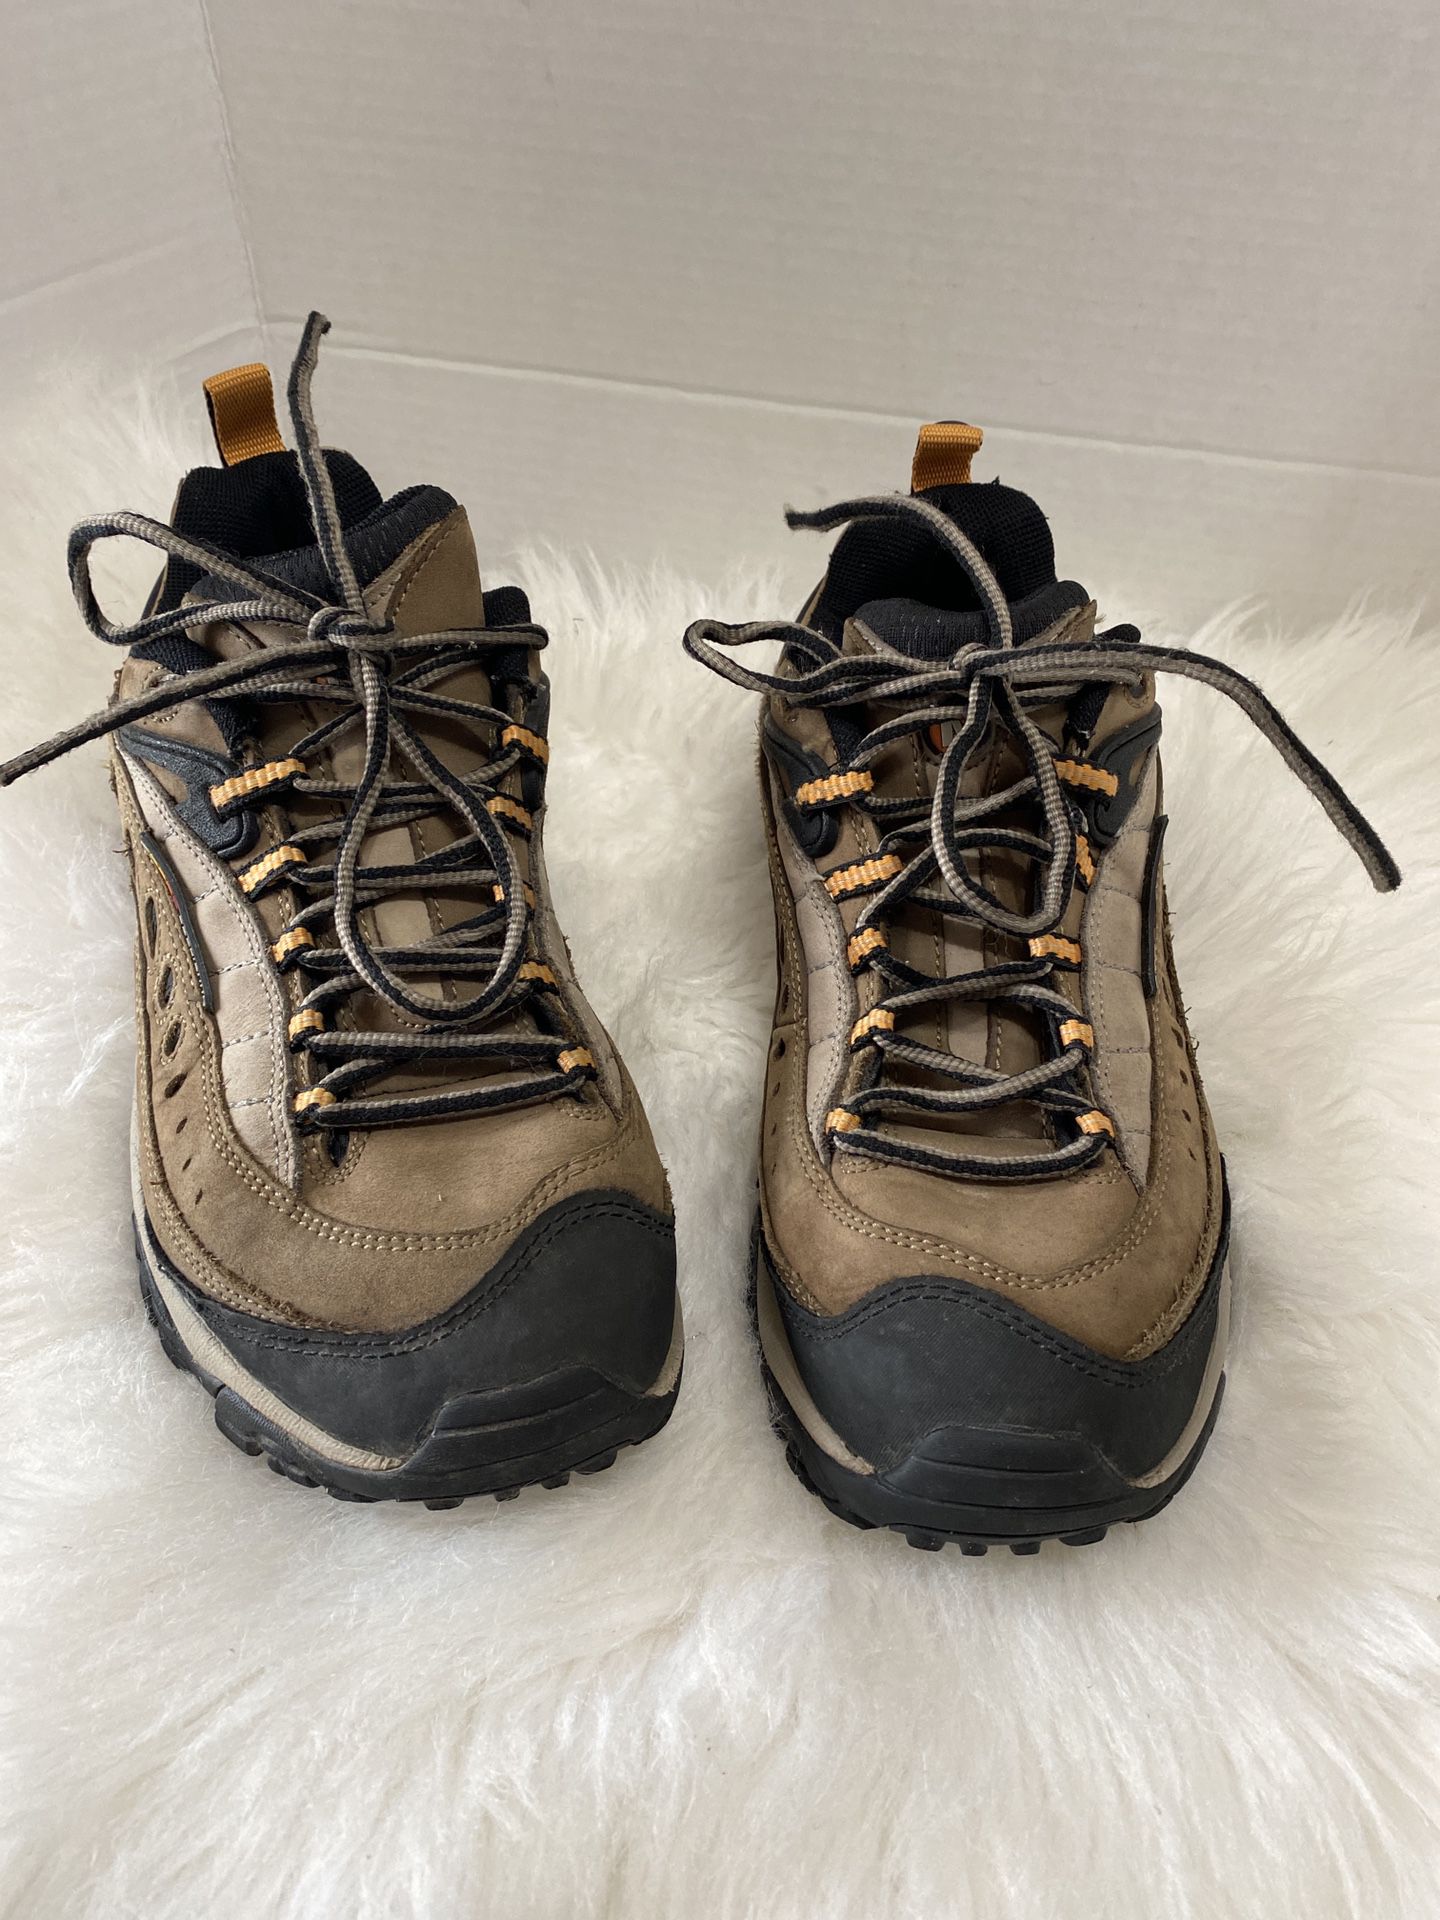 Merrell pulse II waterproof mid smoke hiking boots Mens Sz US 7.5